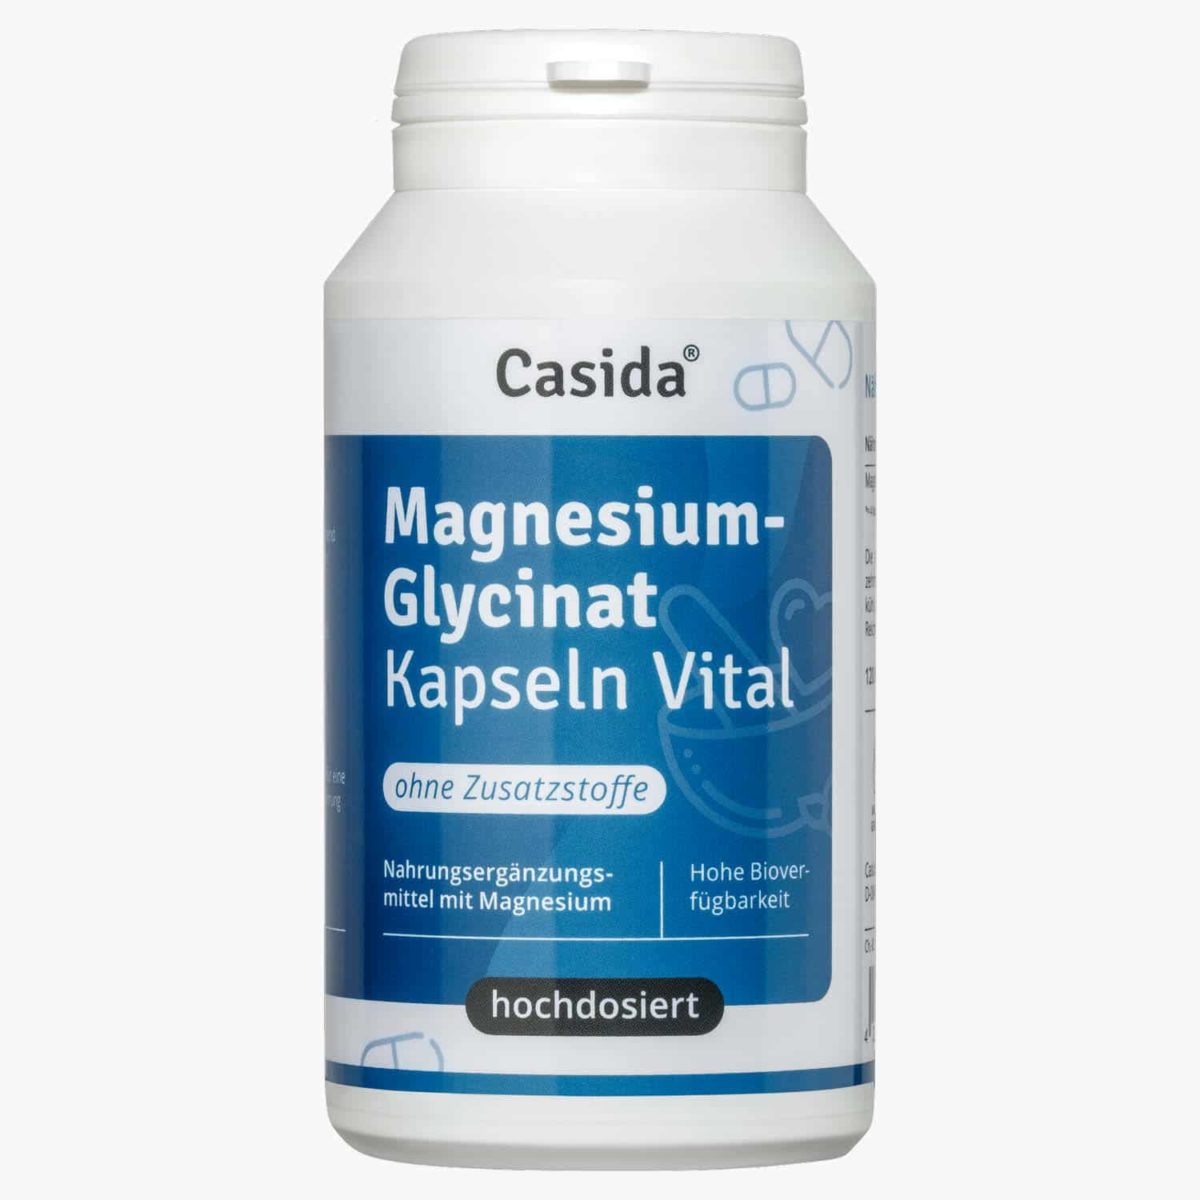 Magnesium Glycinate Capsules Vital – 120 Stk. 14362480 PZN Apotheke Bioverfügbarkeit organisches Magnesium